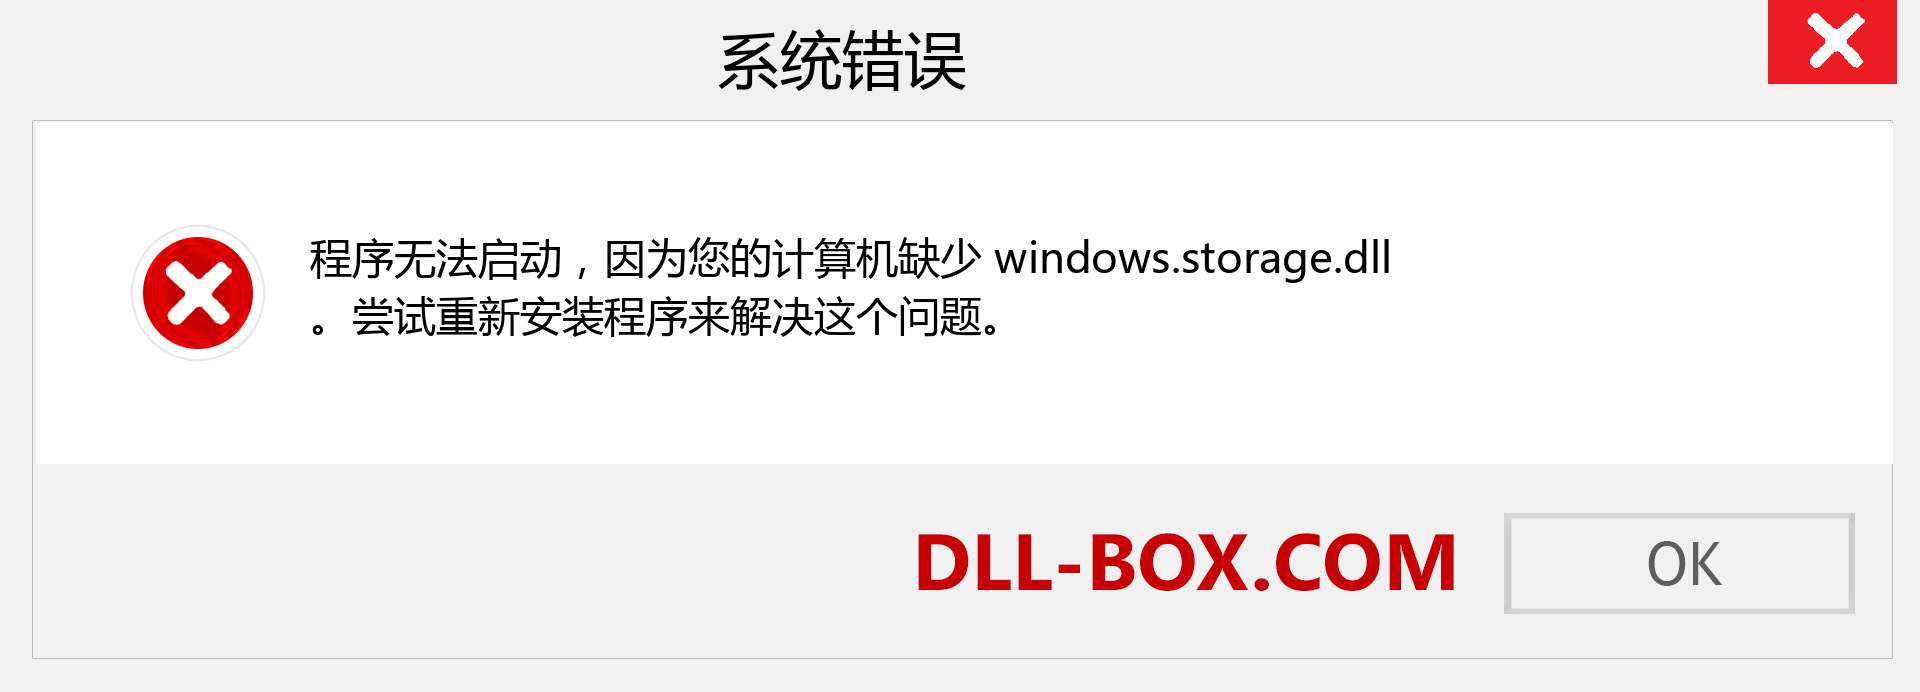 windows.storage.dll 文件丢失？。 适用于 Windows 7、8、10 的下载 - 修复 Windows、照片、图像上的 windows.storage dll 丢失错误